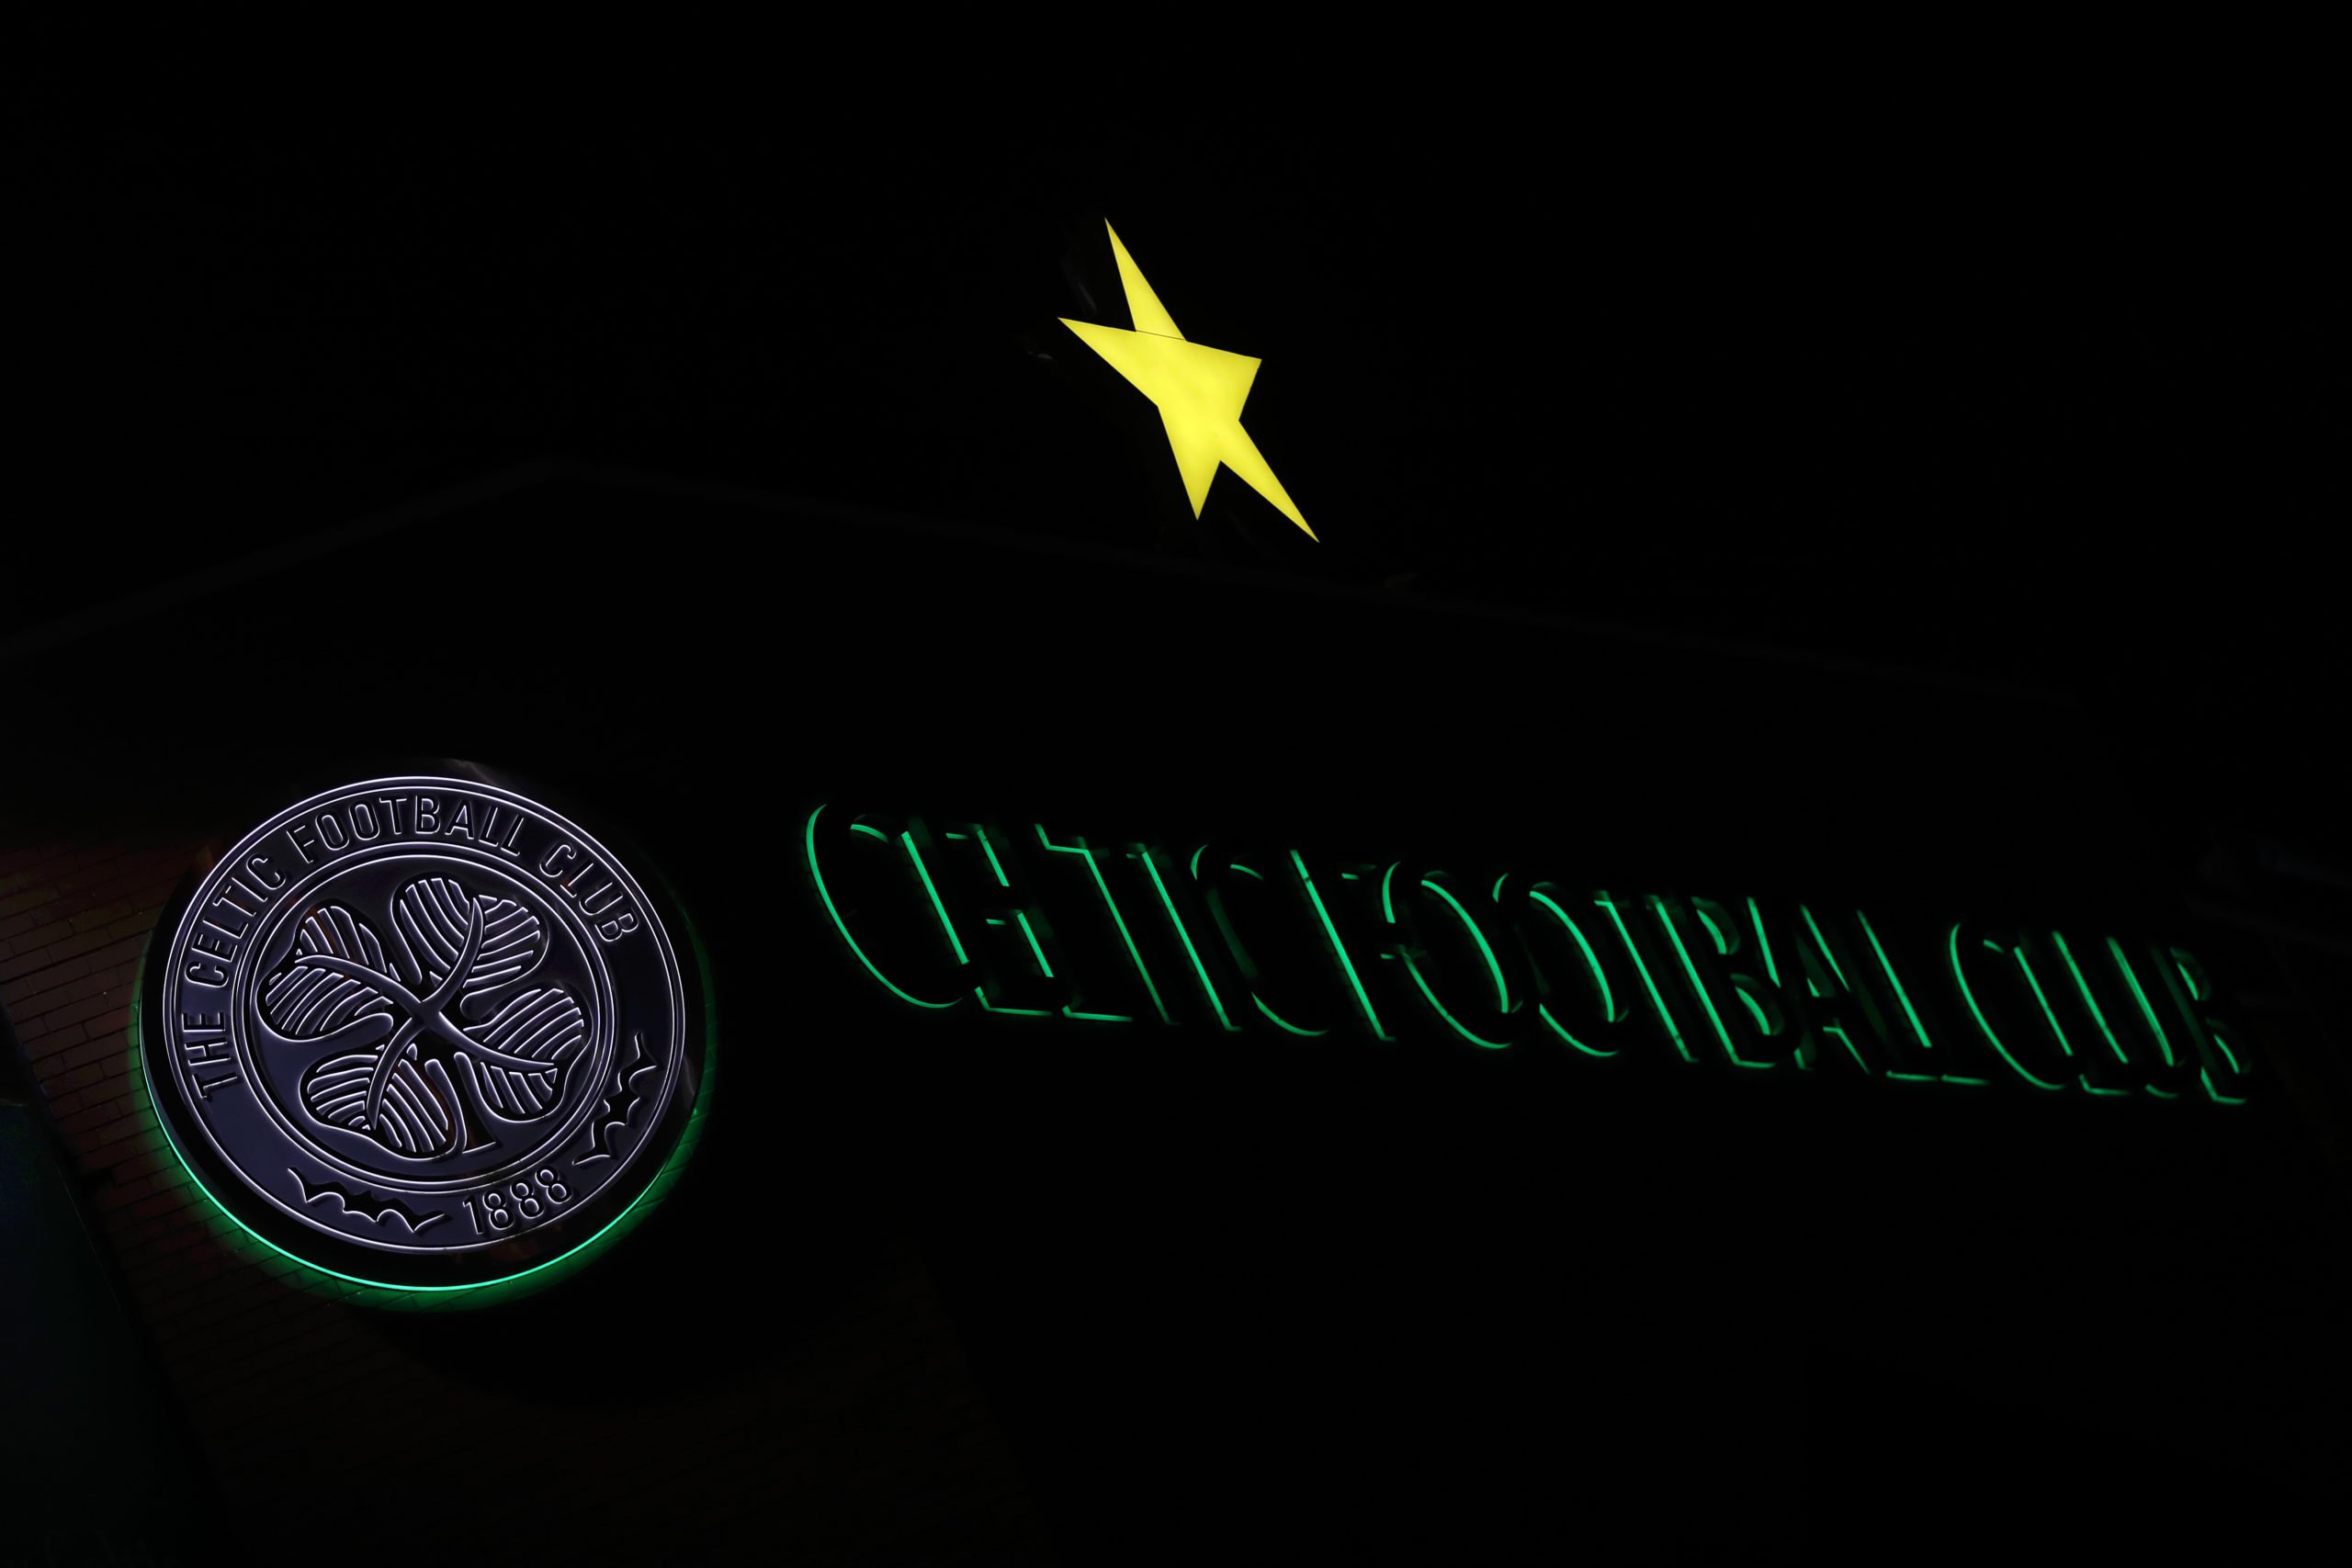 SPFL confirm brutal fixture change for Celtic supporters